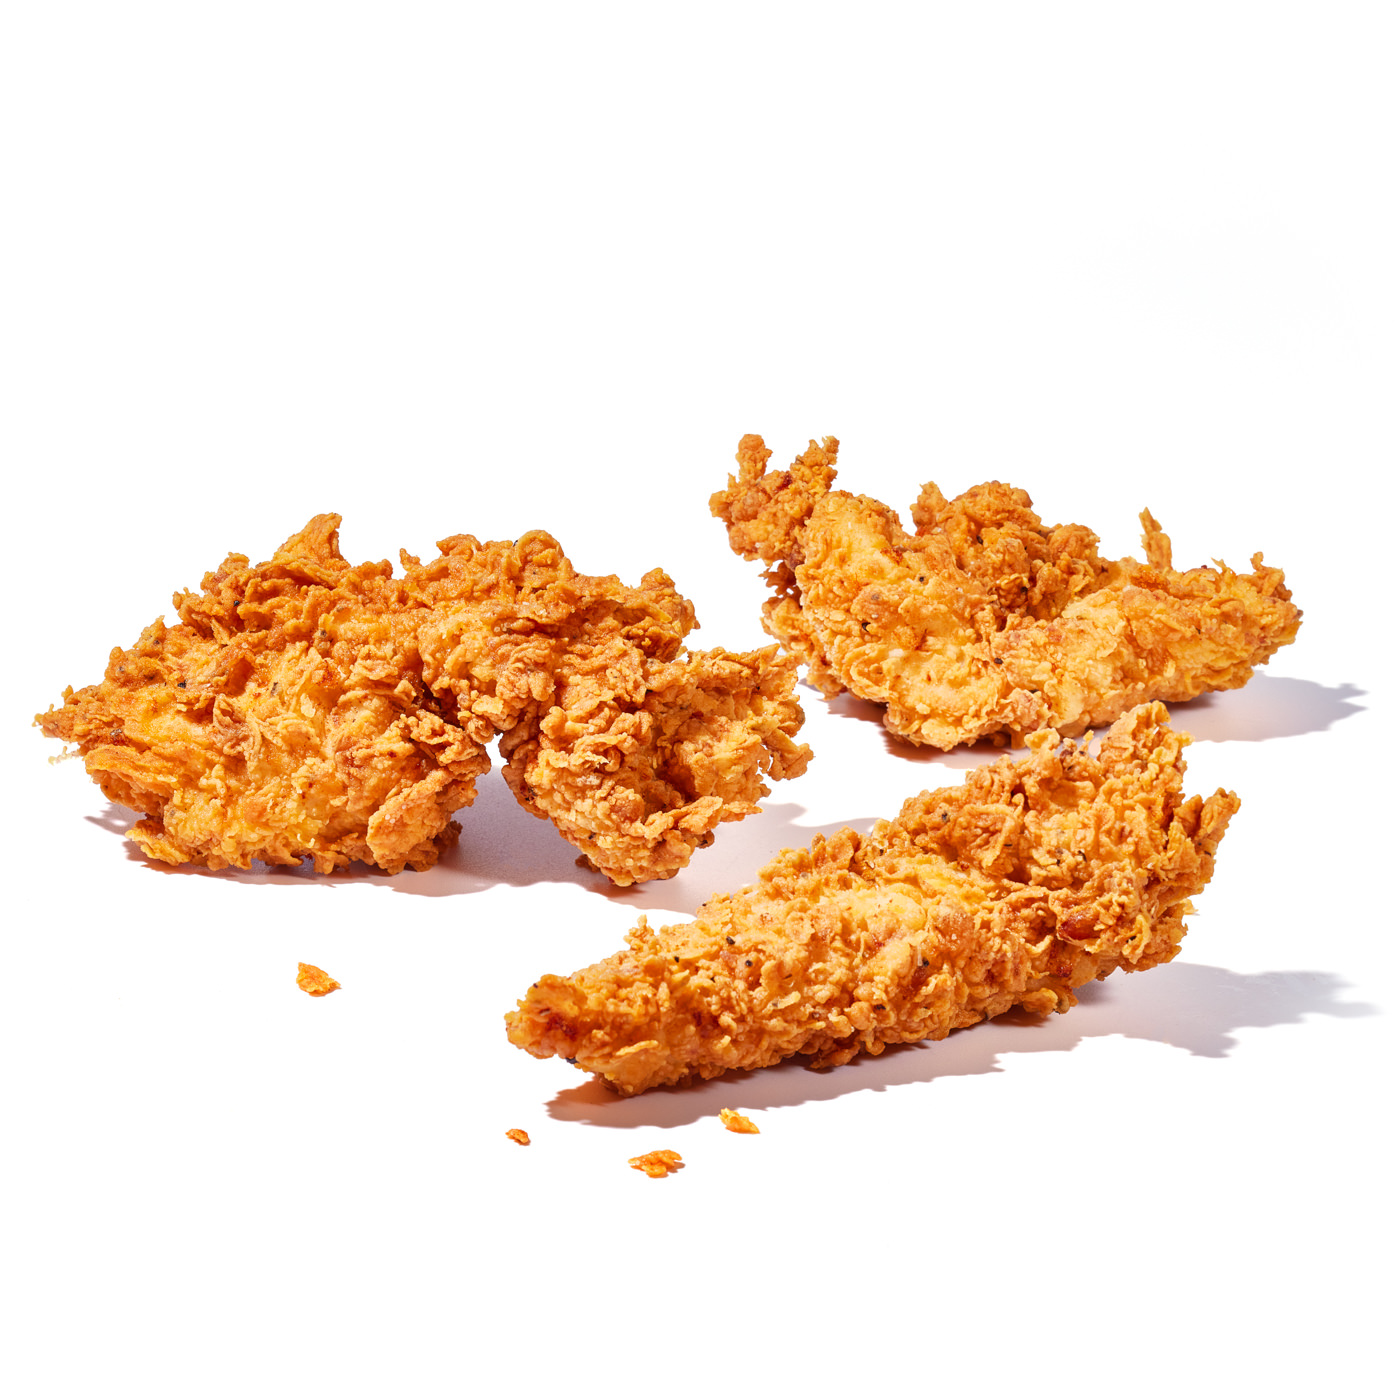 Crispy chicken pieces by Toronto photographer